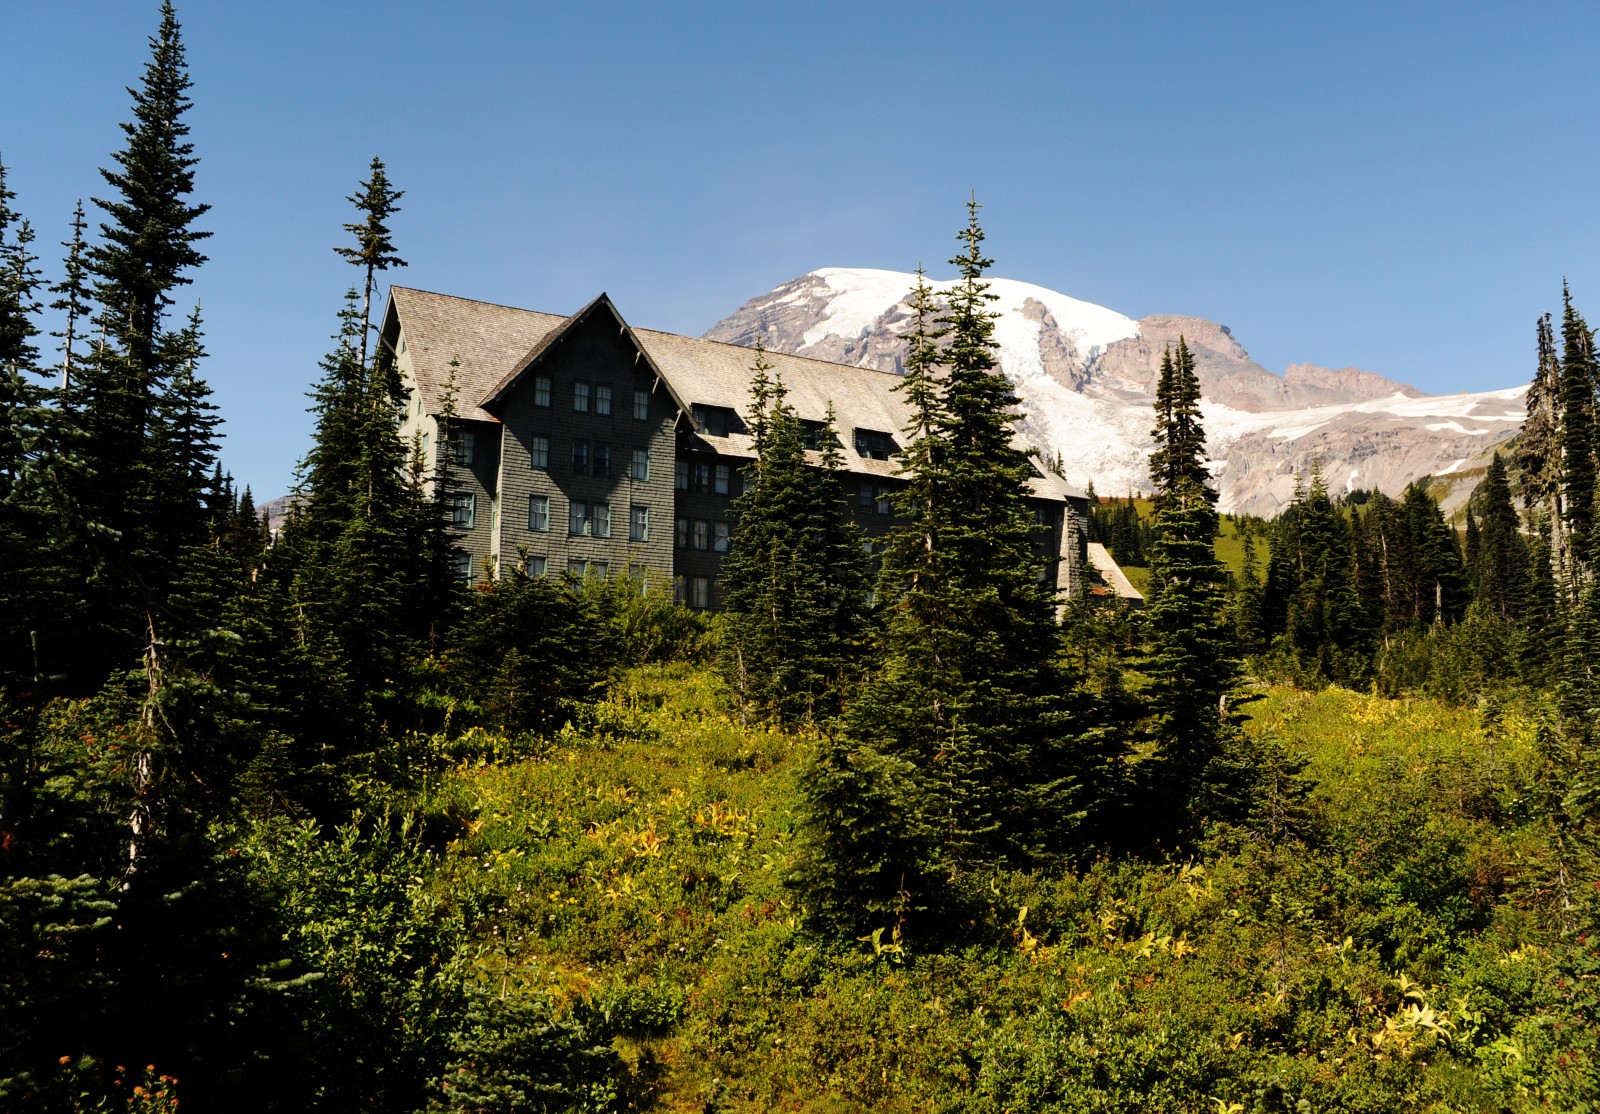 The Paradise Inn nestled below the top of Mt. Rainier DD1